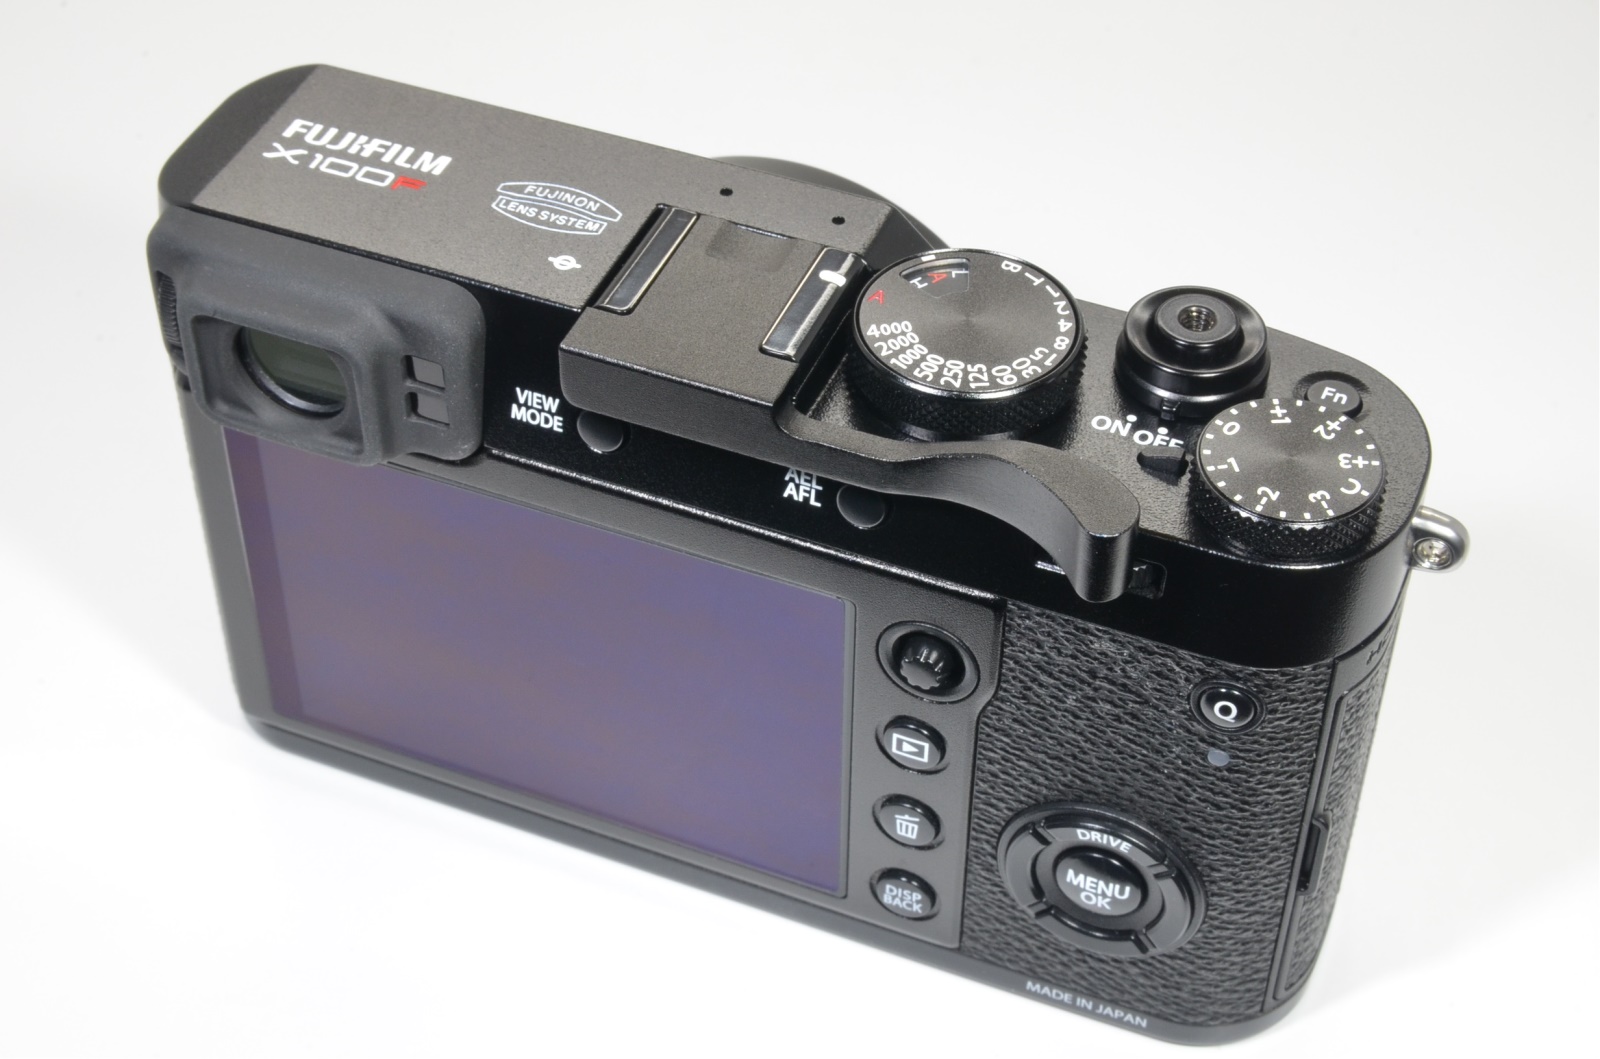 fuji fujifilm x100f black 24.3mp digital camera shutter count 6500 from japan